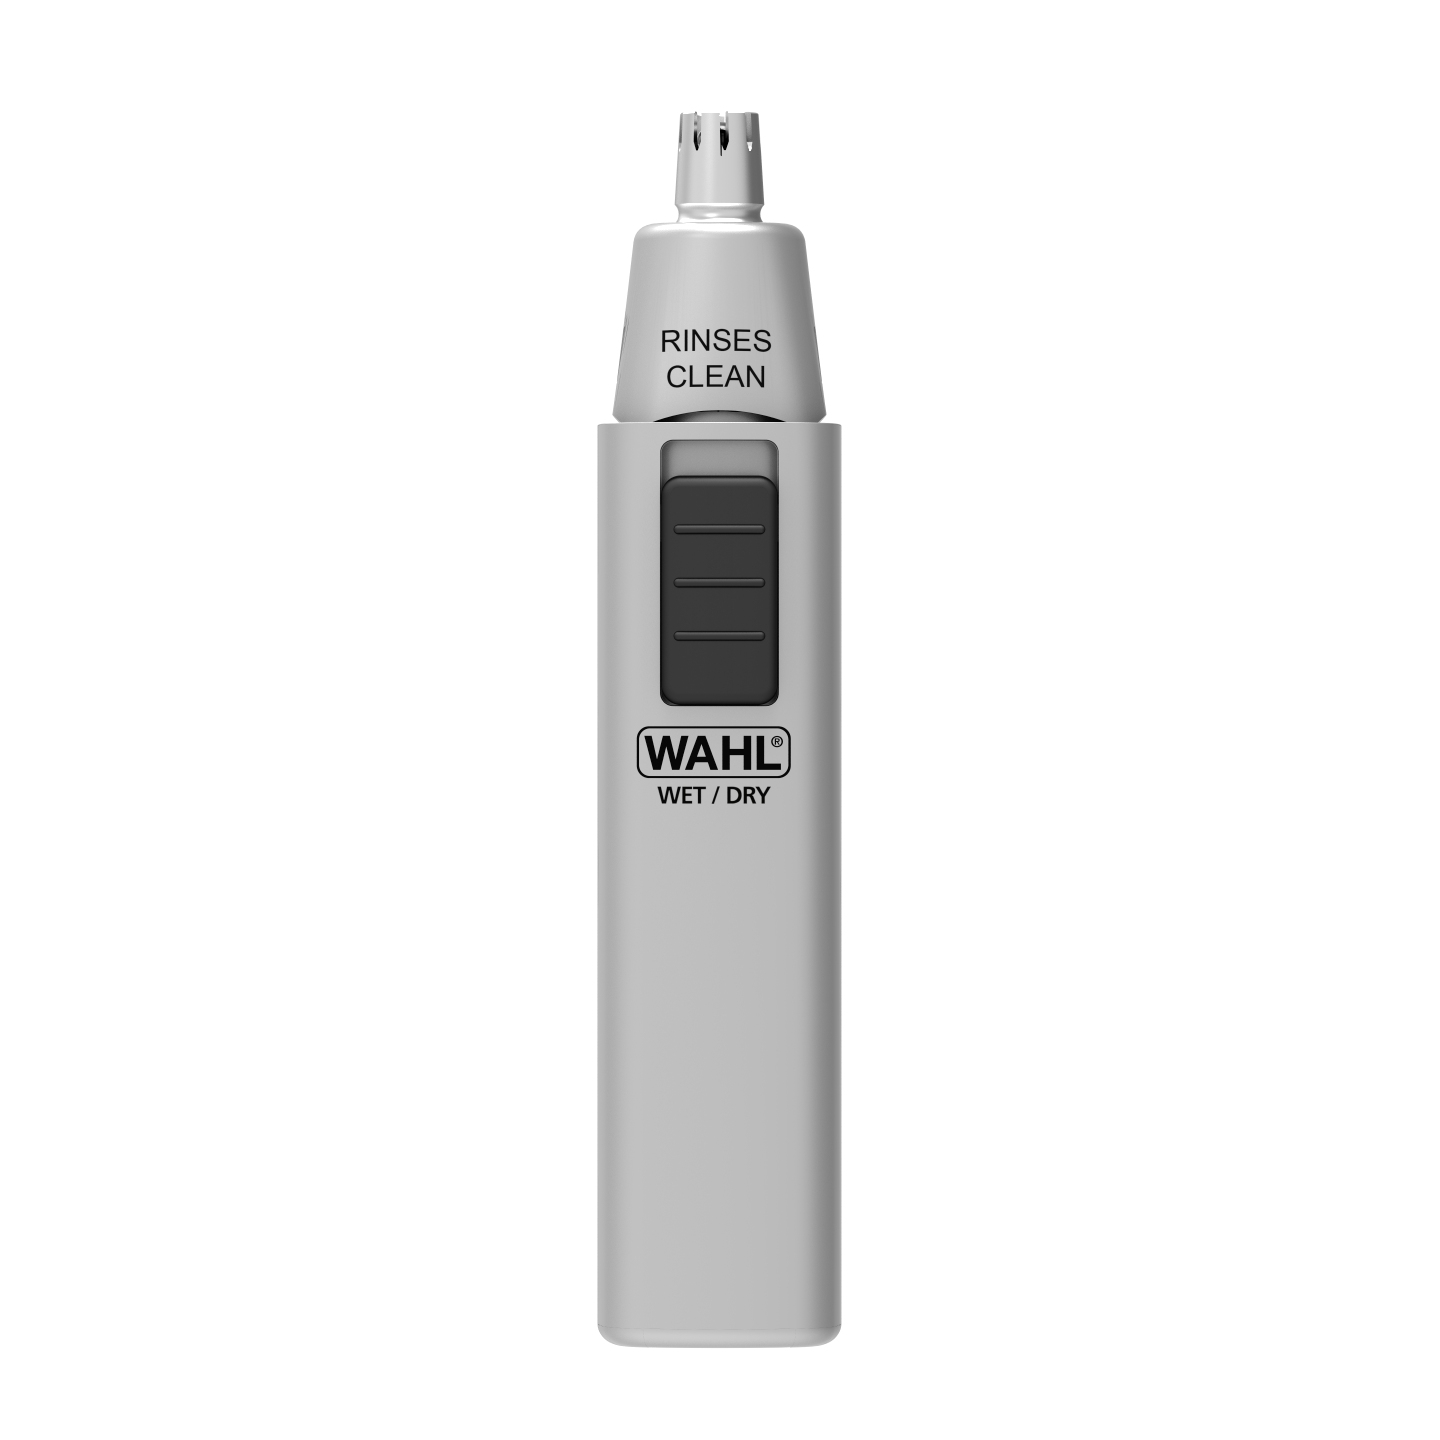 wahl nose trimmer battery